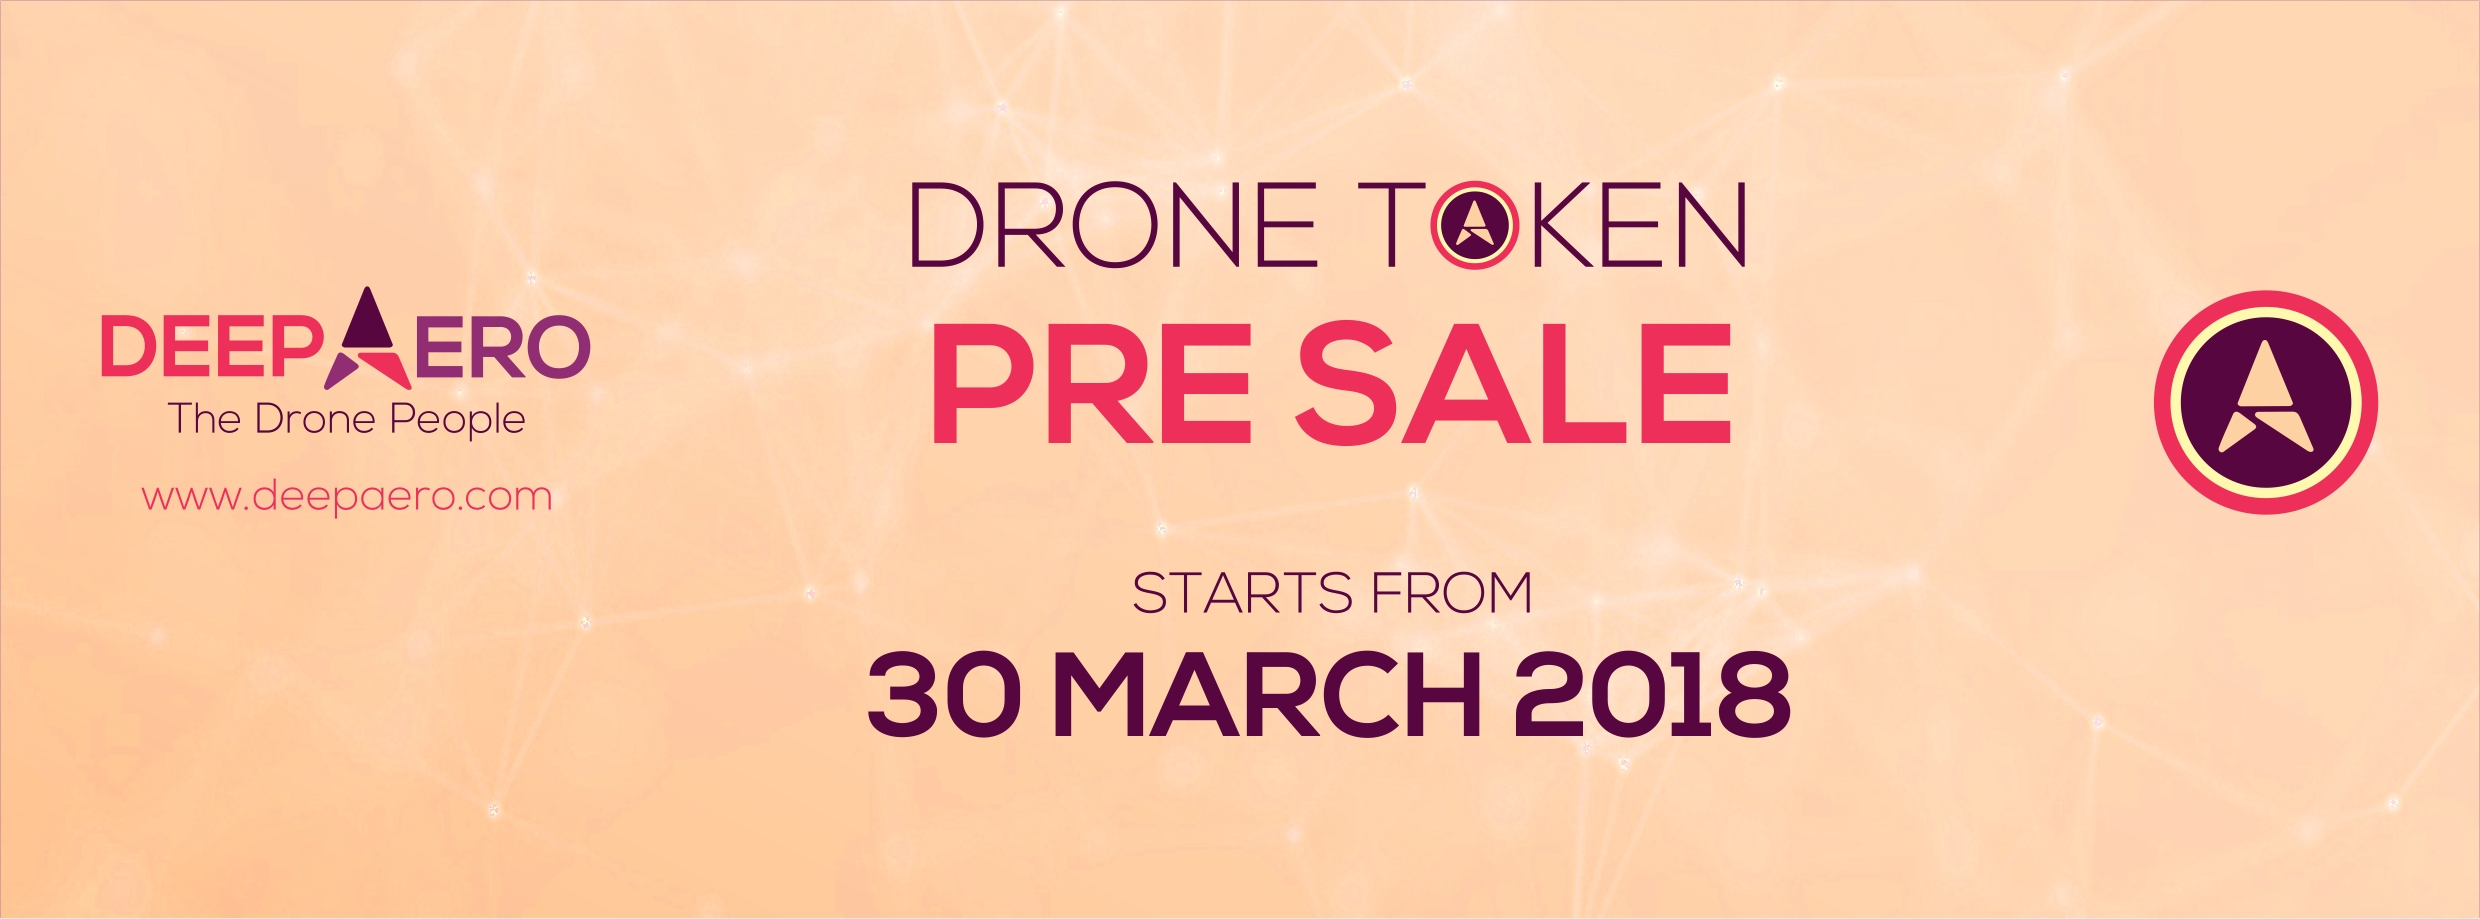 DEEP AERO's Drone Token Pre-Sale